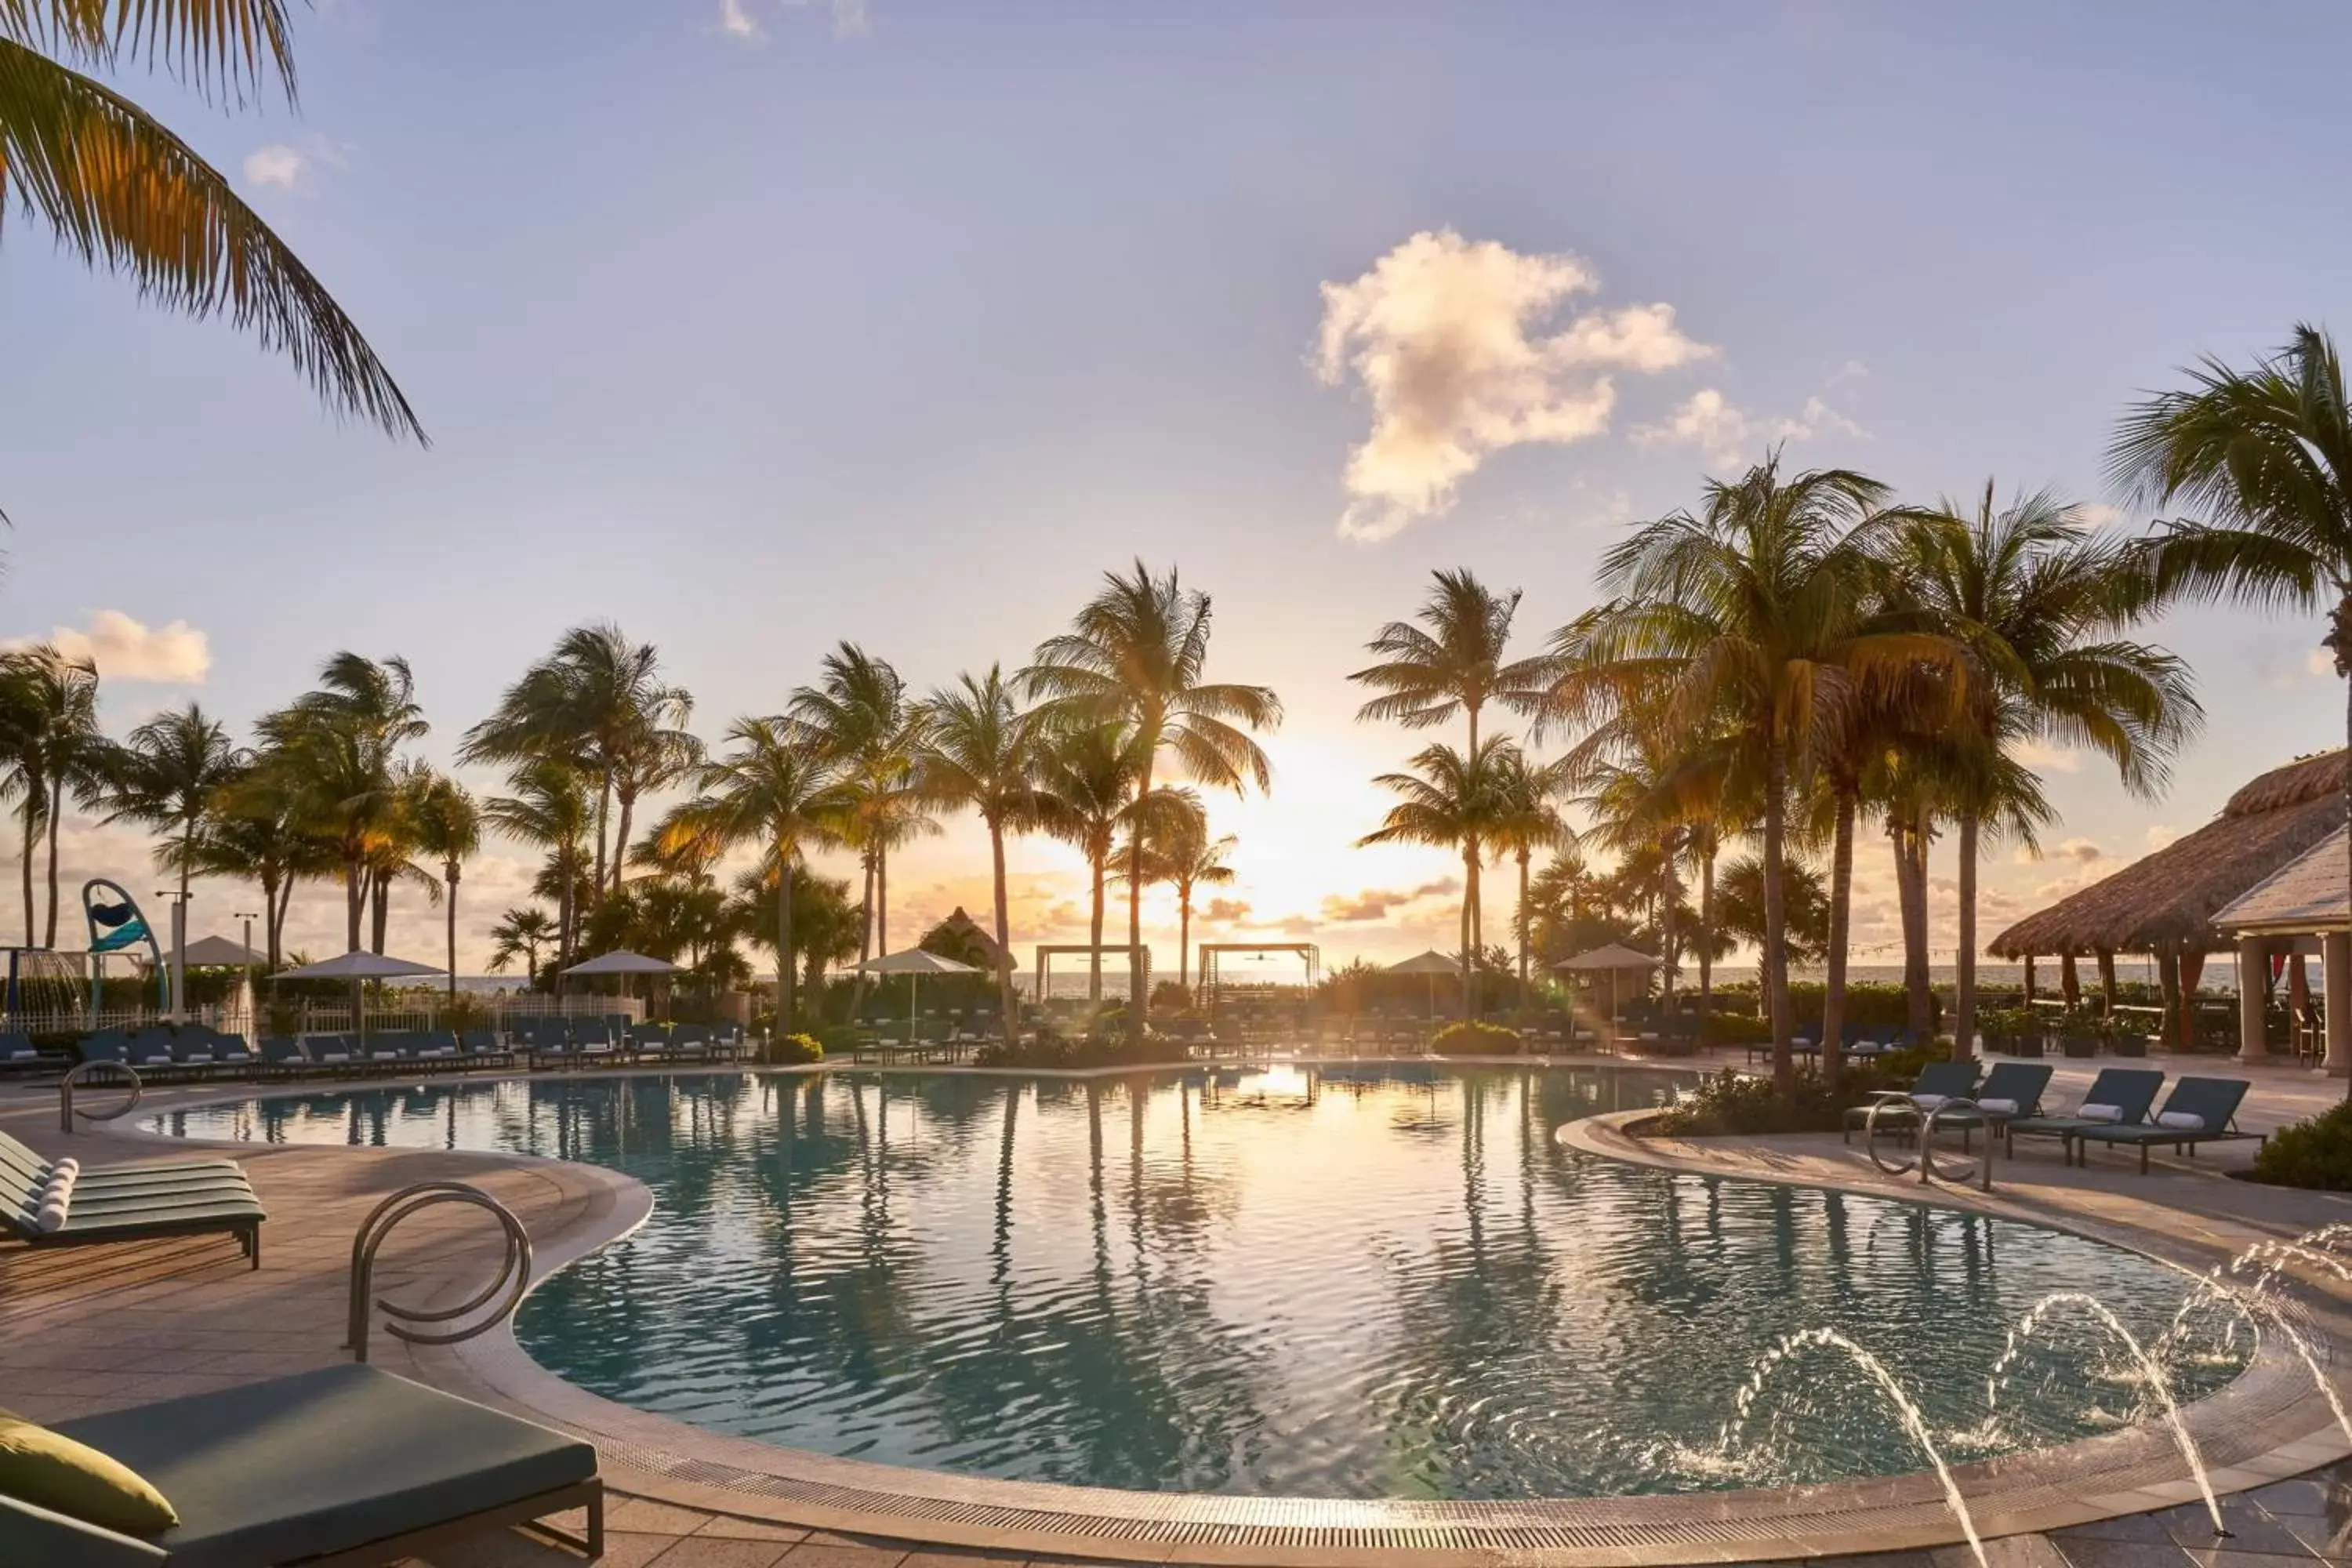 Swimming Pool in The Ritz Carlton Key Biscayne, Miami